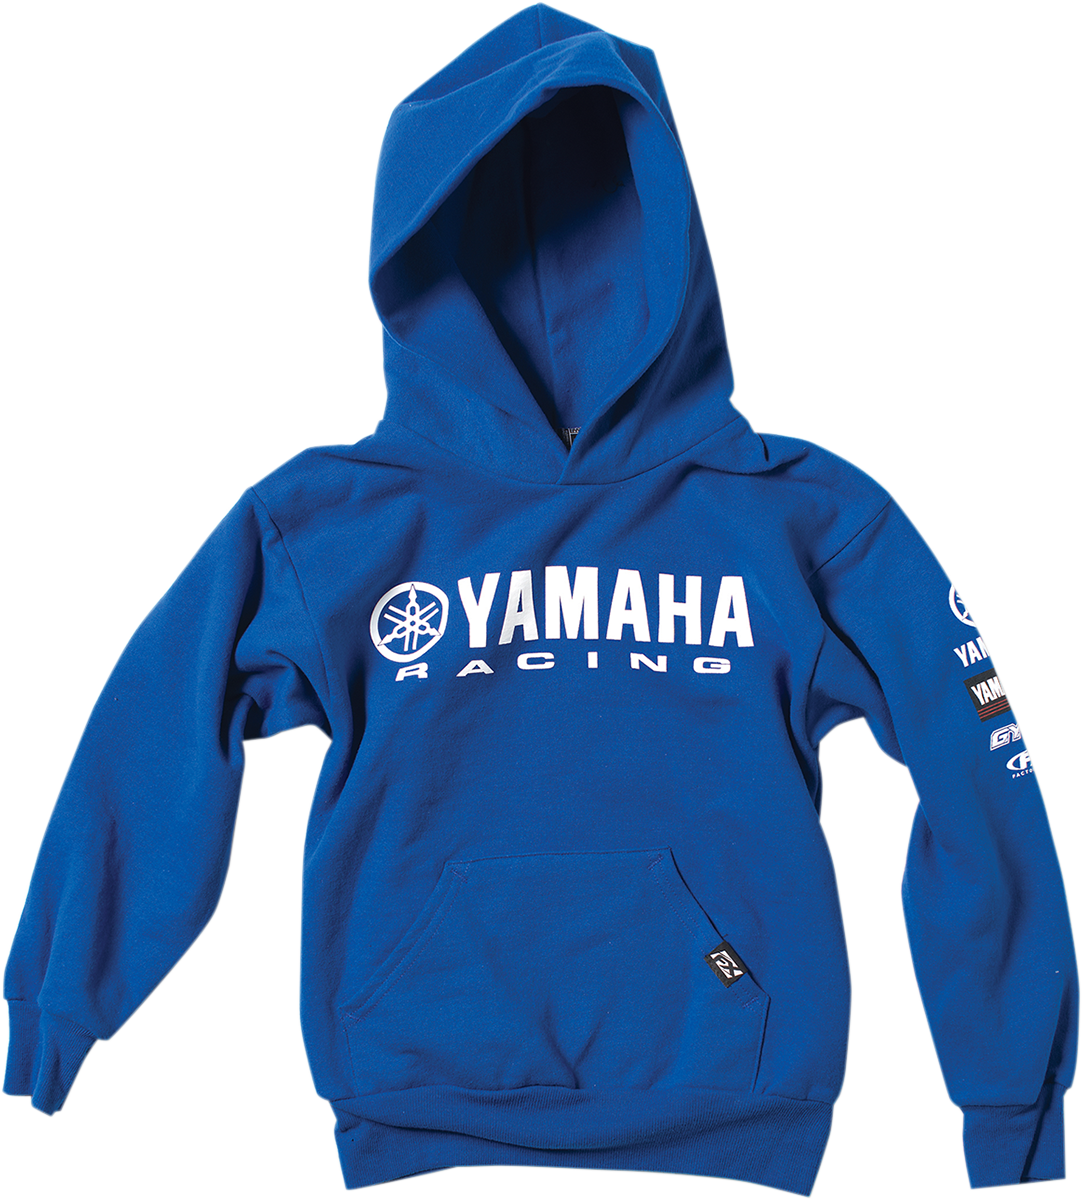 FACTORY EFFEX Youth Yamaha Racing Hoodie - Blue - Small 19-83230